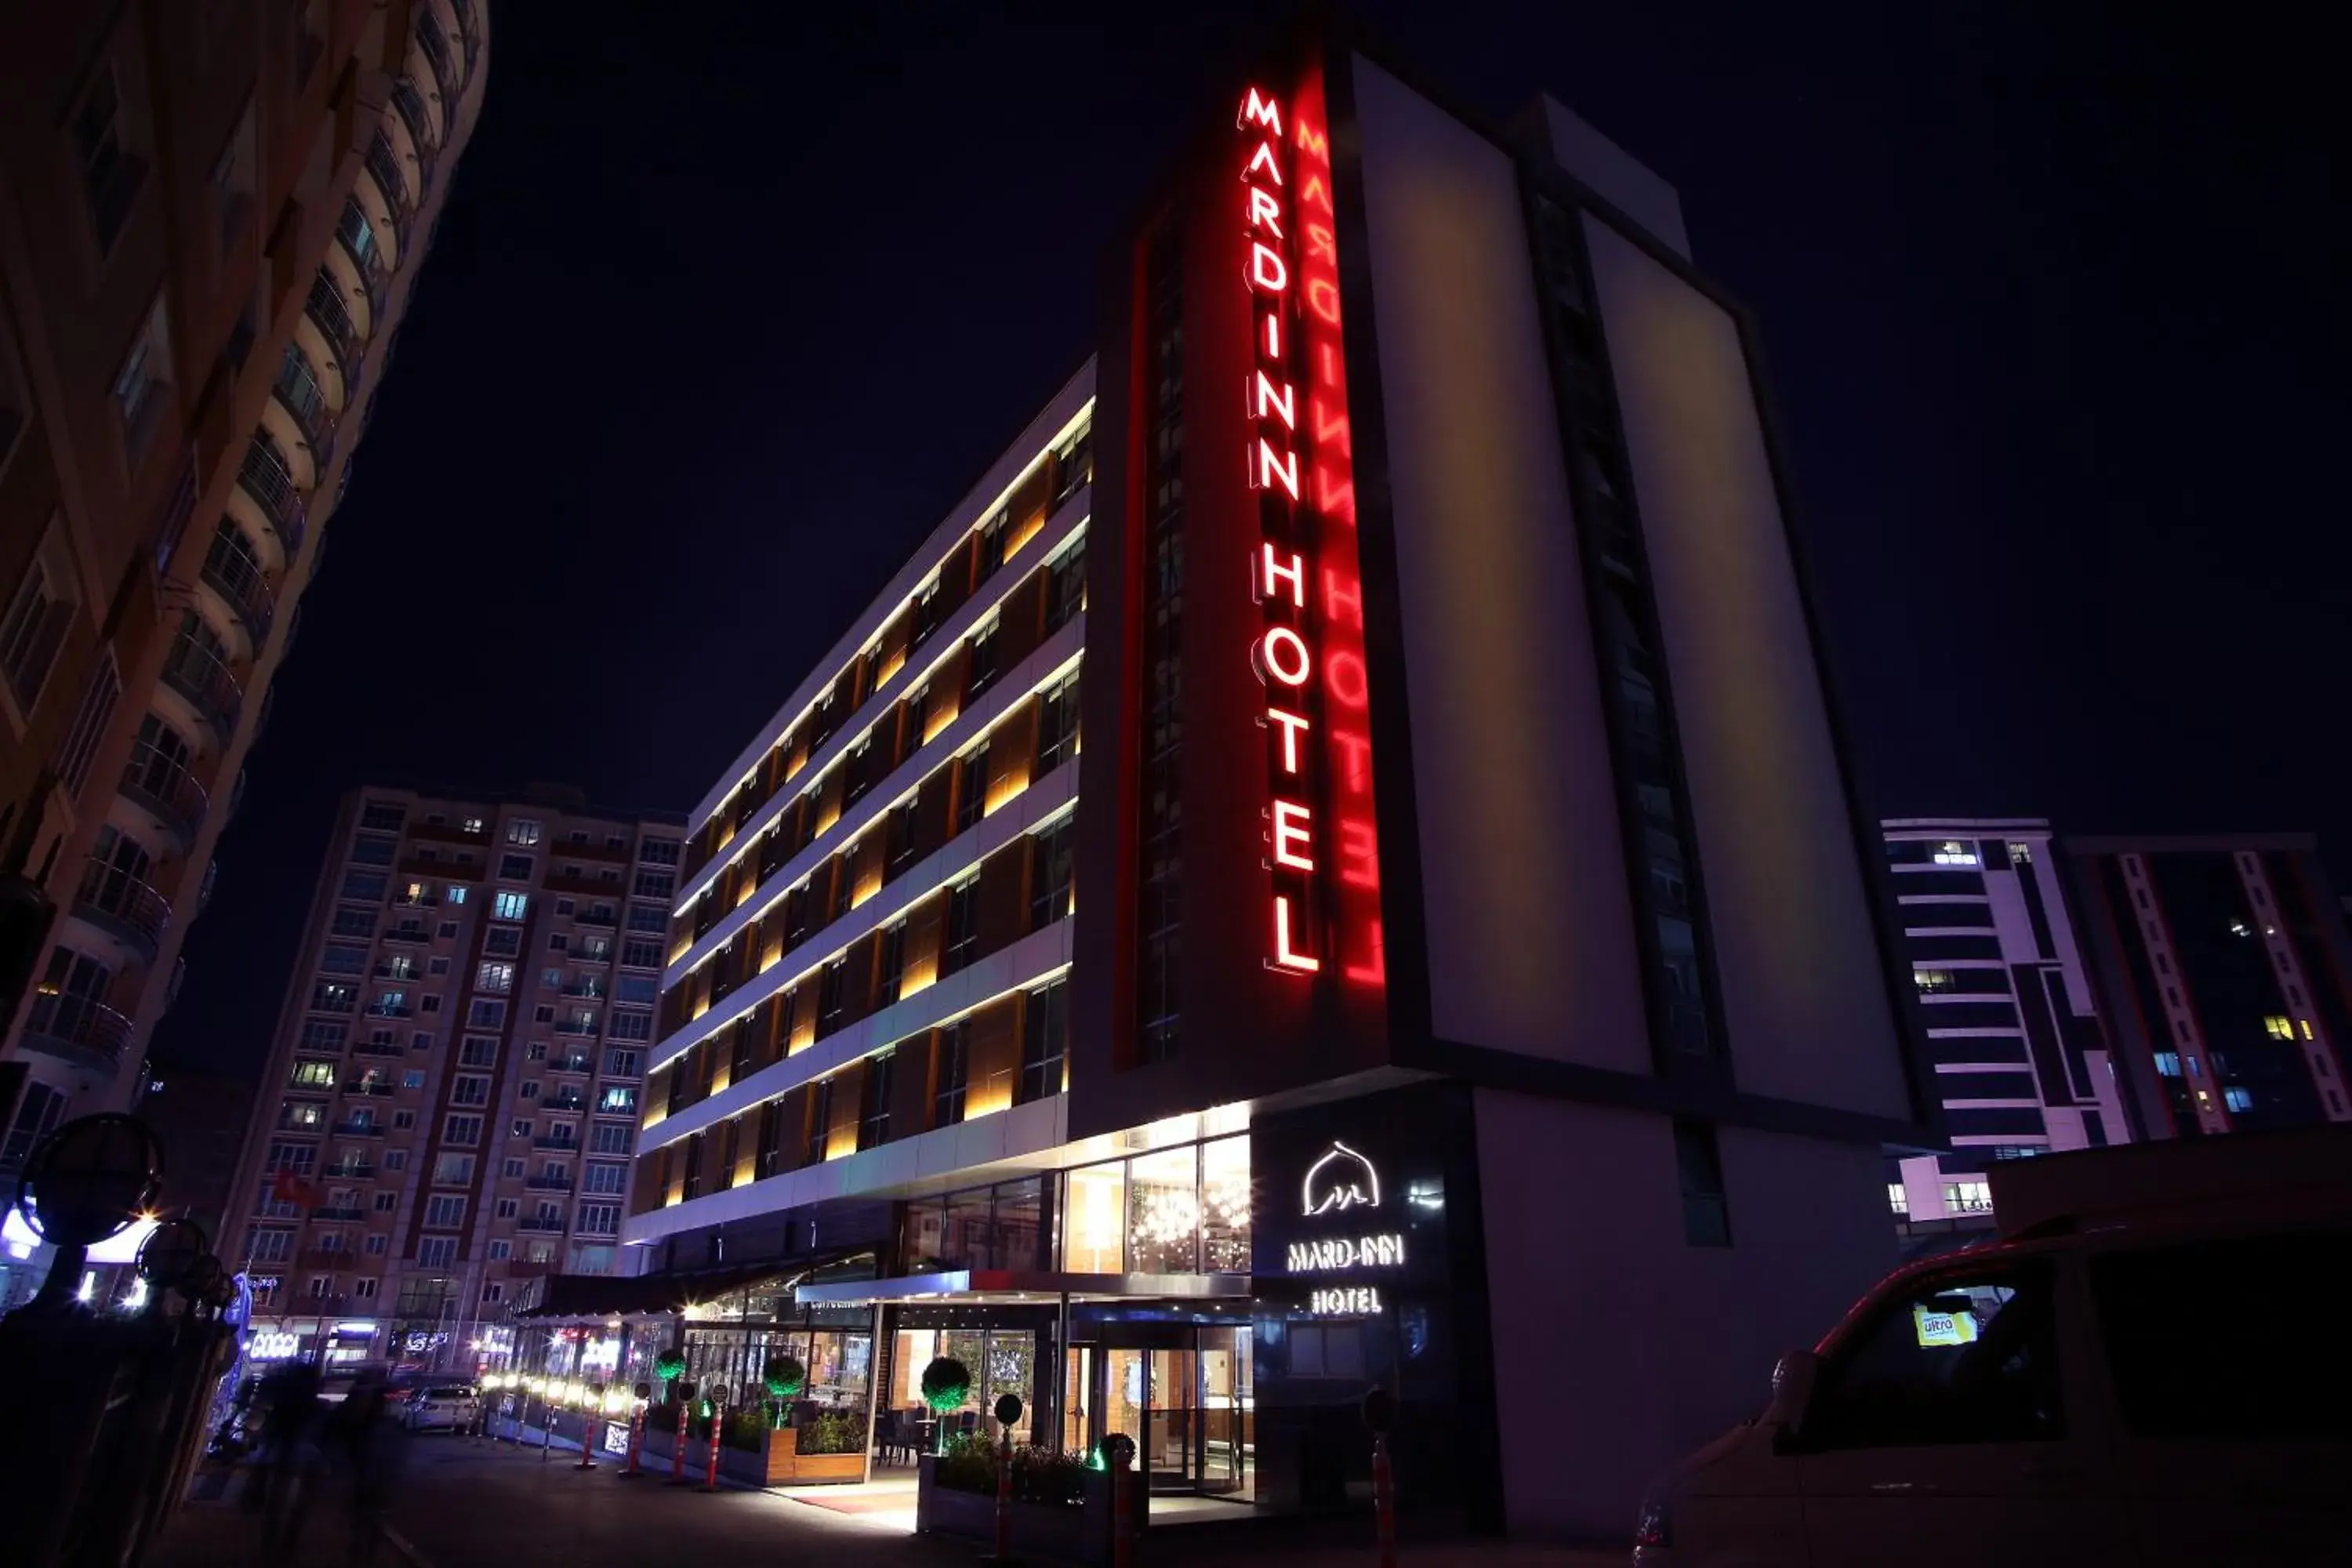 Night, Property Building in Mard-inn Hotel